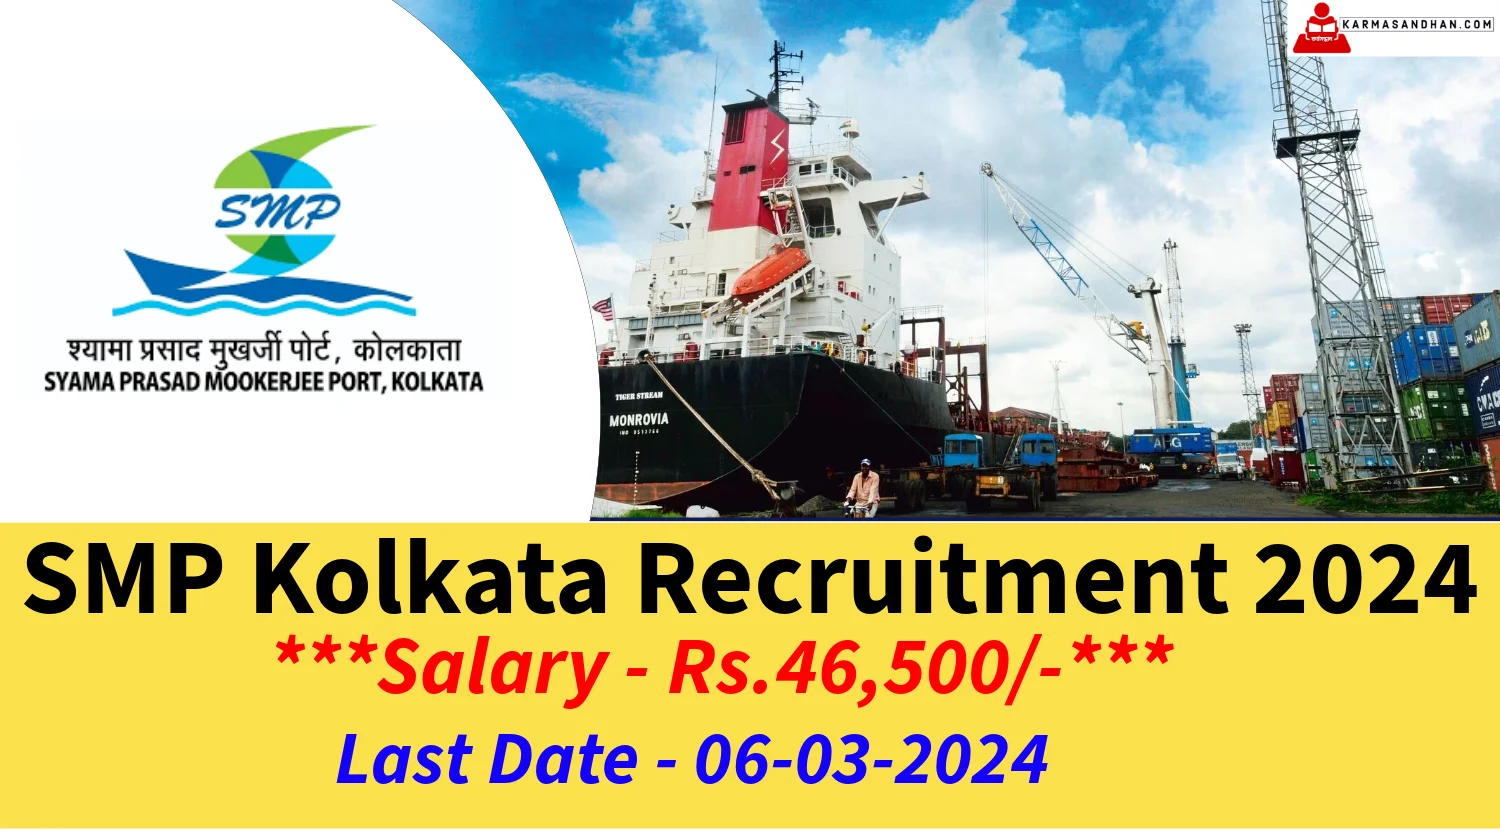 SMP Kolkata Marine Officer Recruitment 2024 Notification Out